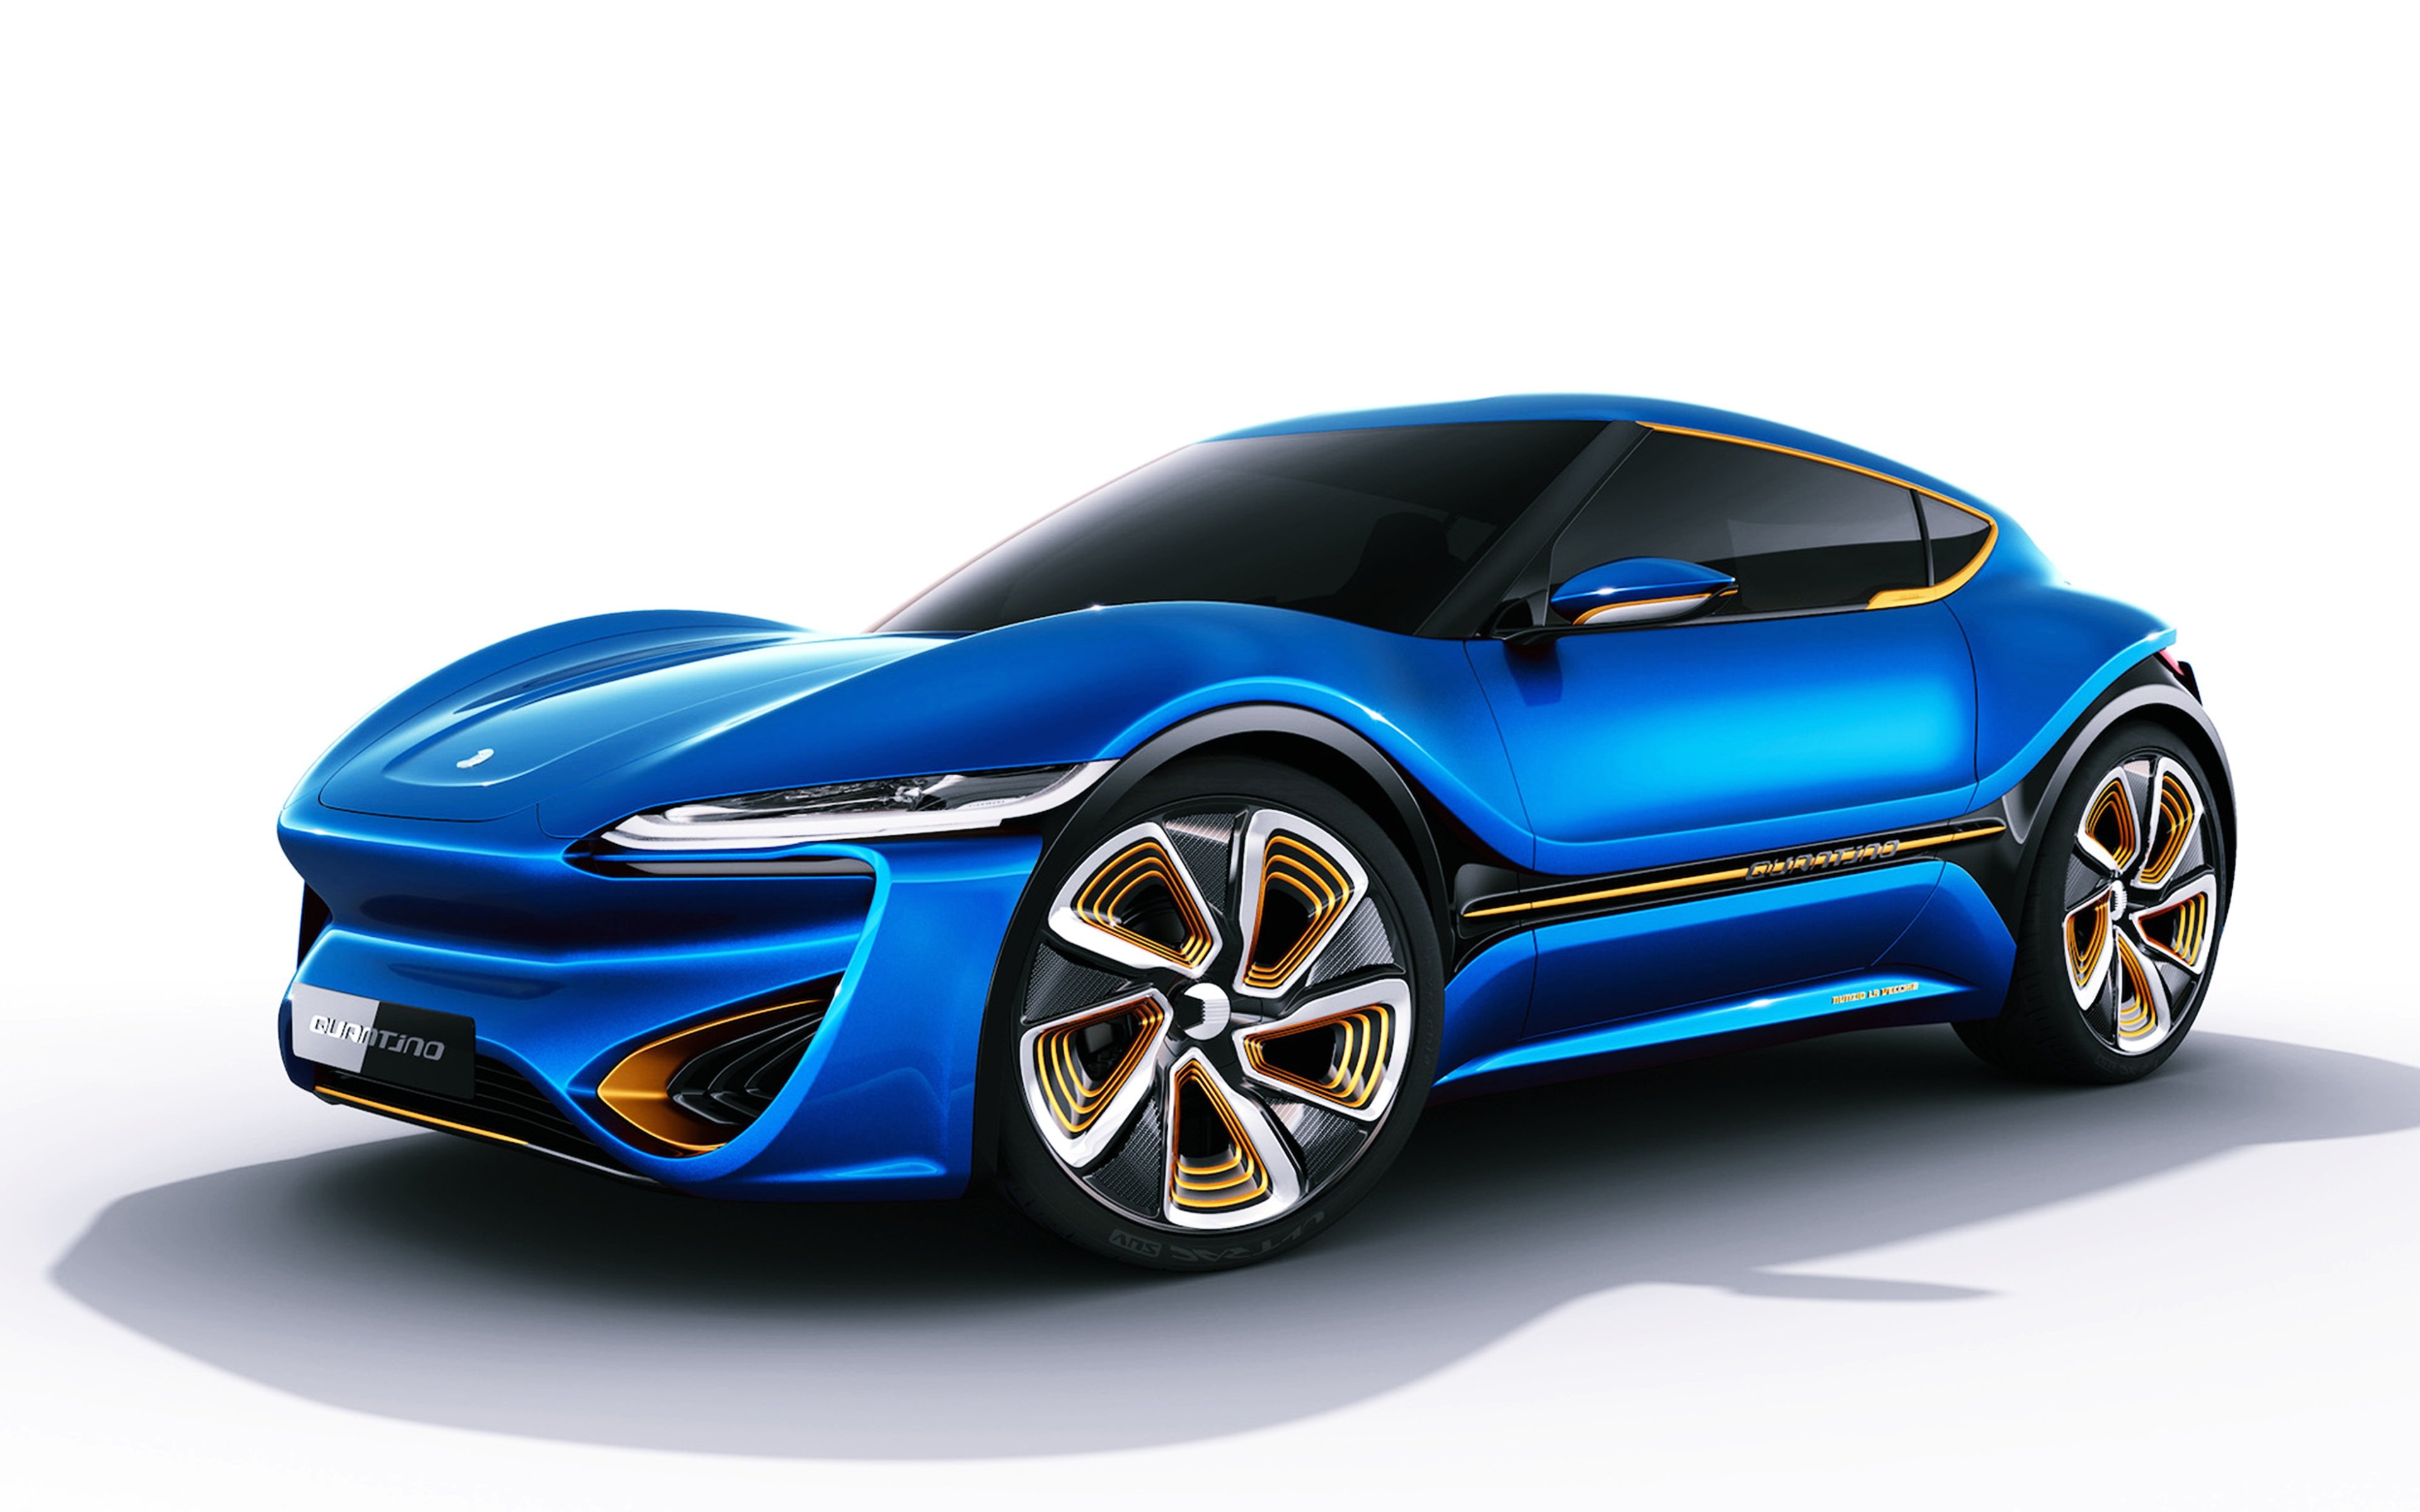 2016, Nanoflowcell, Quantino, Wide, Blue, Cars, Speed, Motors Wallpaper